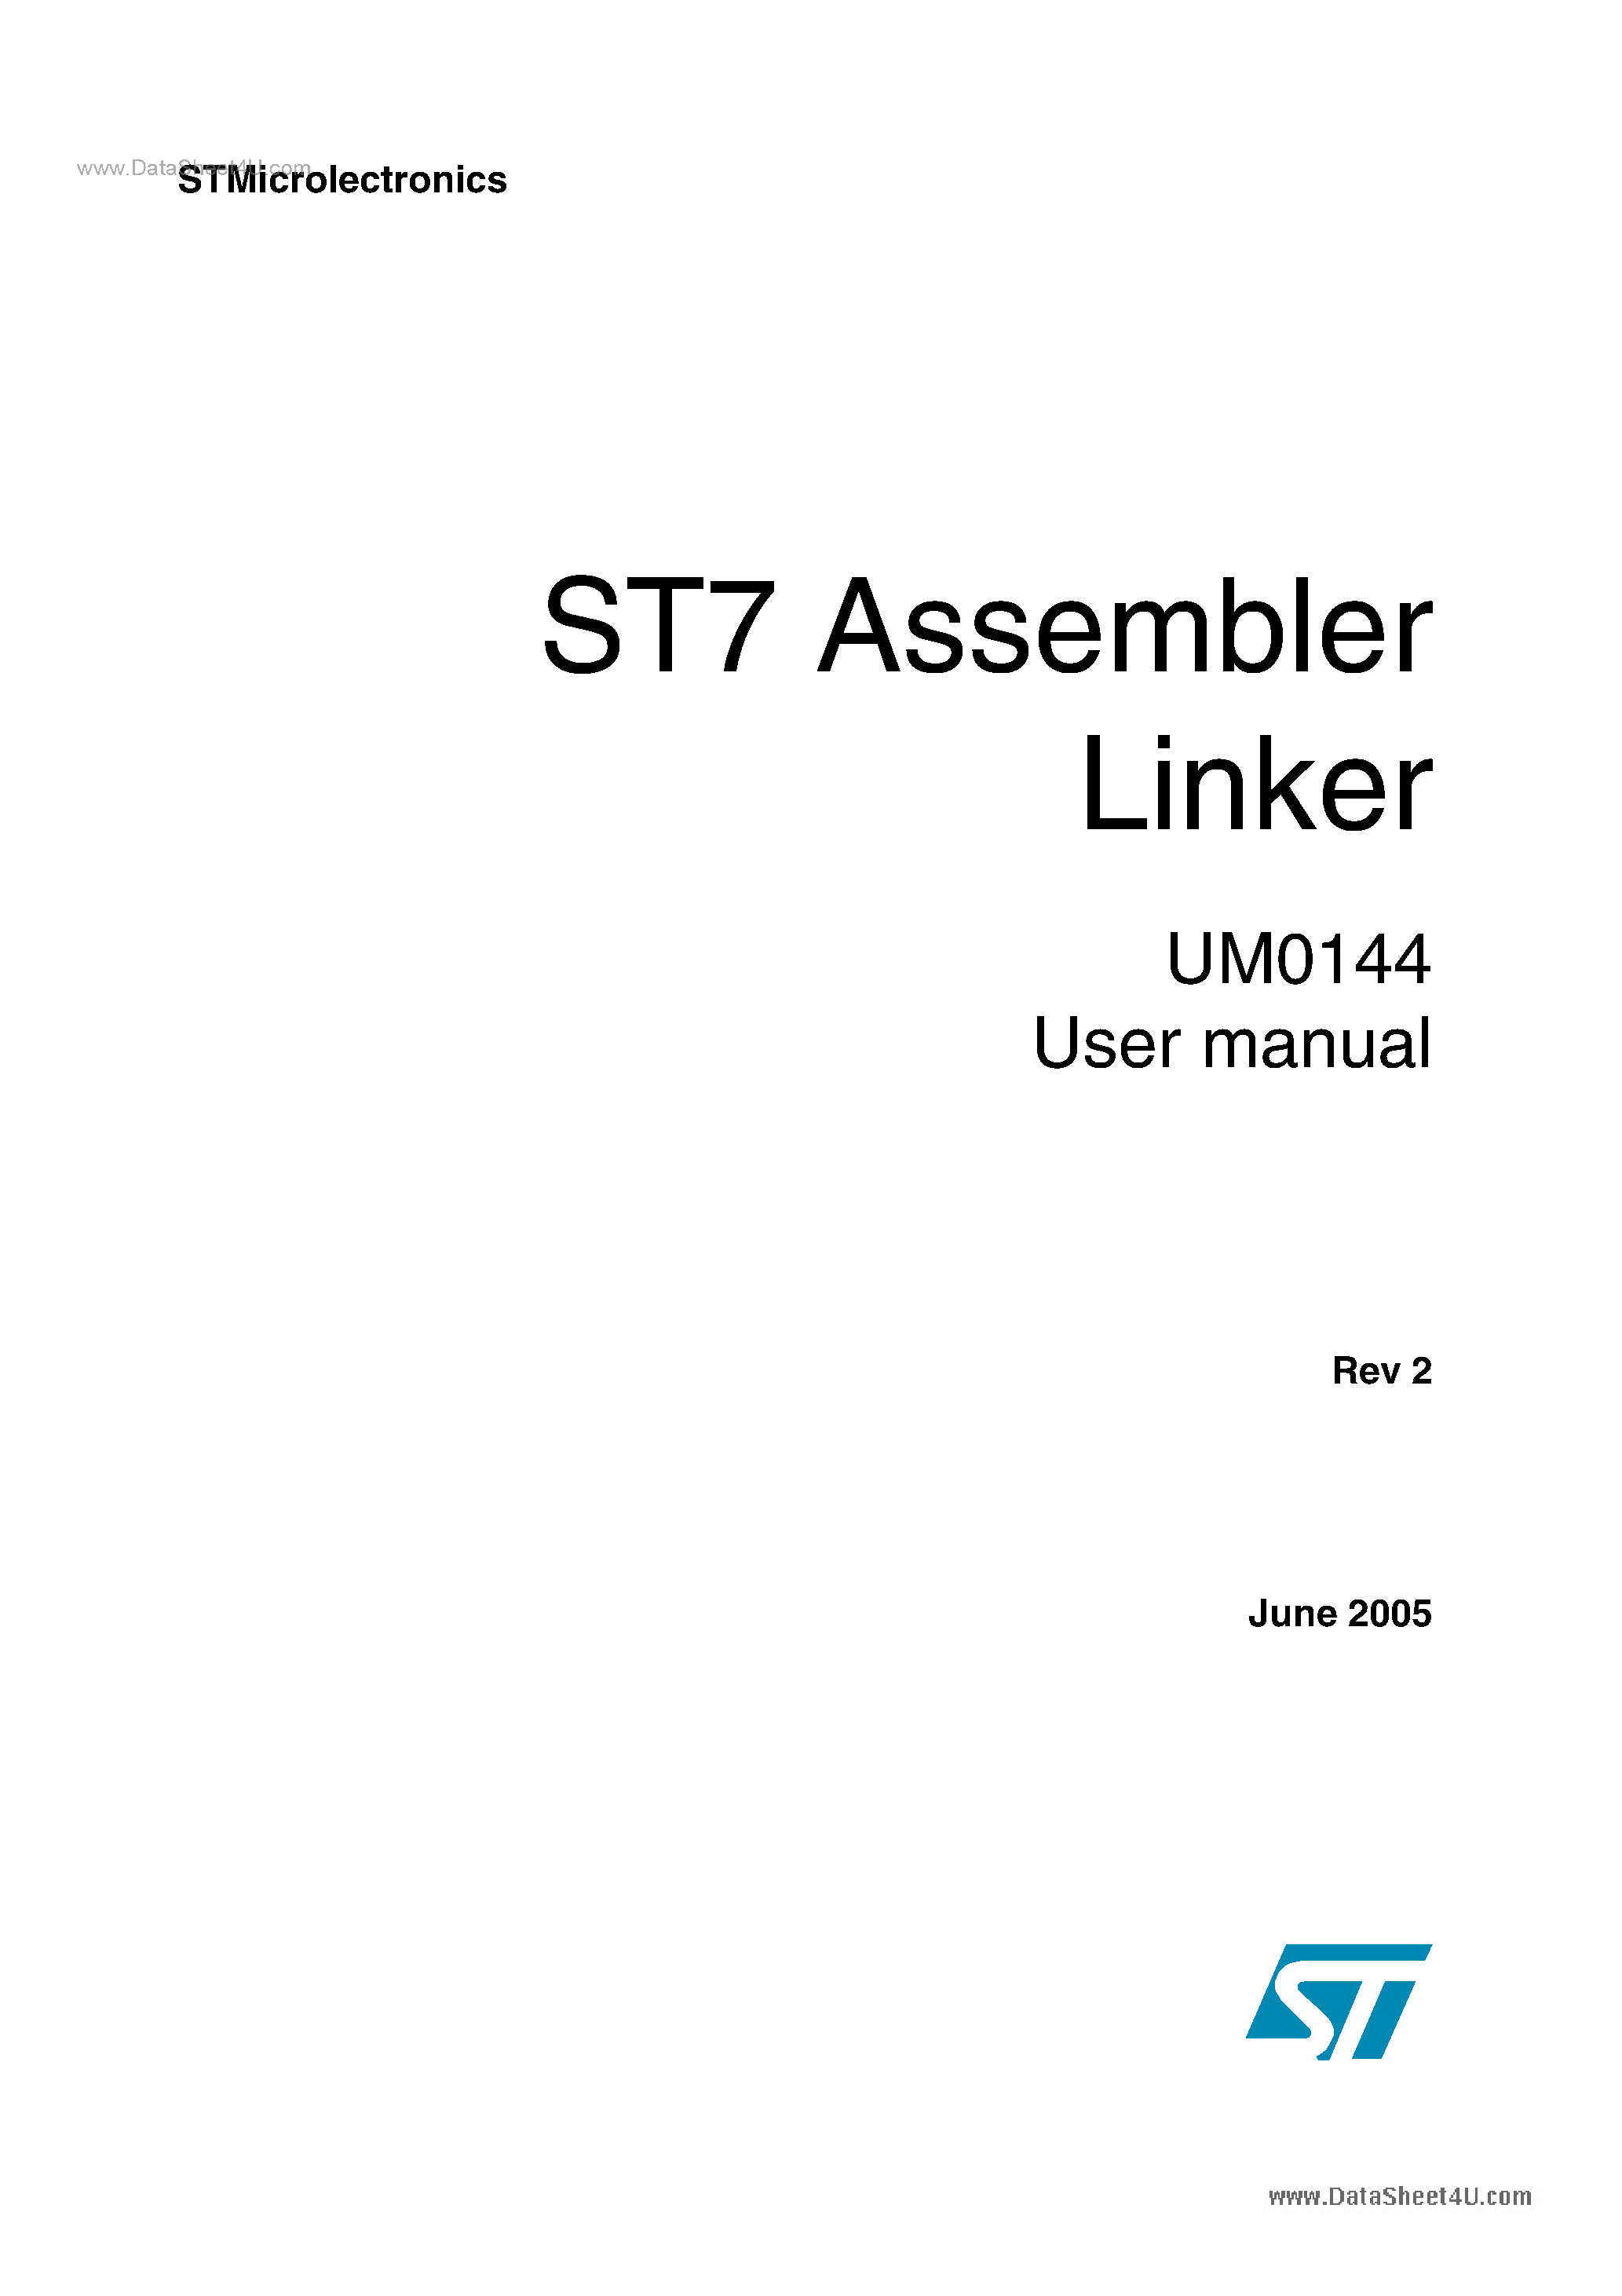 Даташит UM0144 - ST7 Assembler Linker страница 1